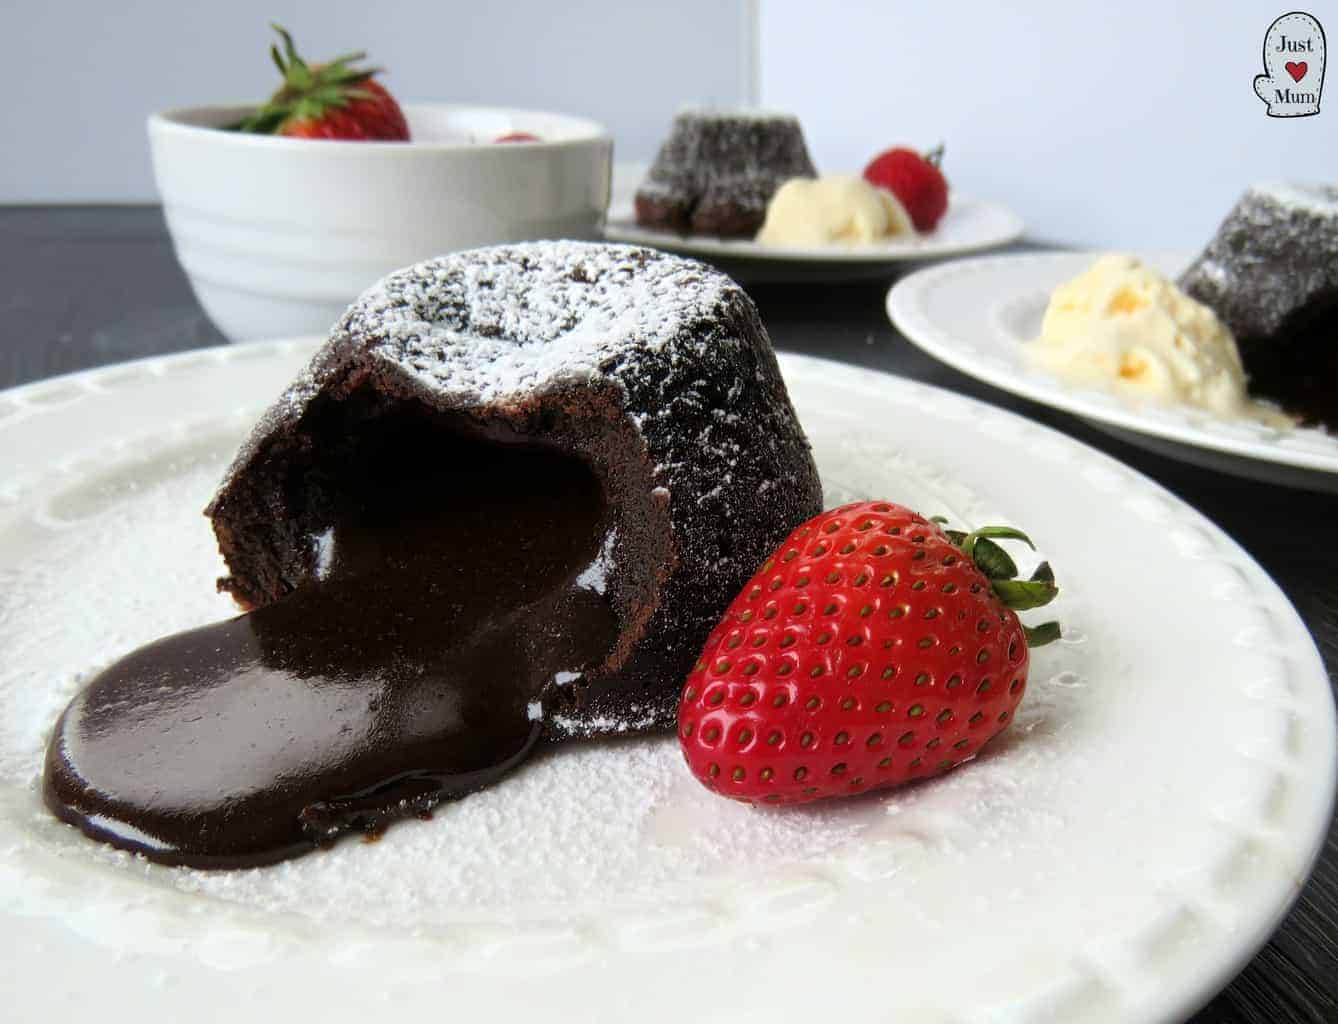 Just A Mum's Chocolate Lava Cake